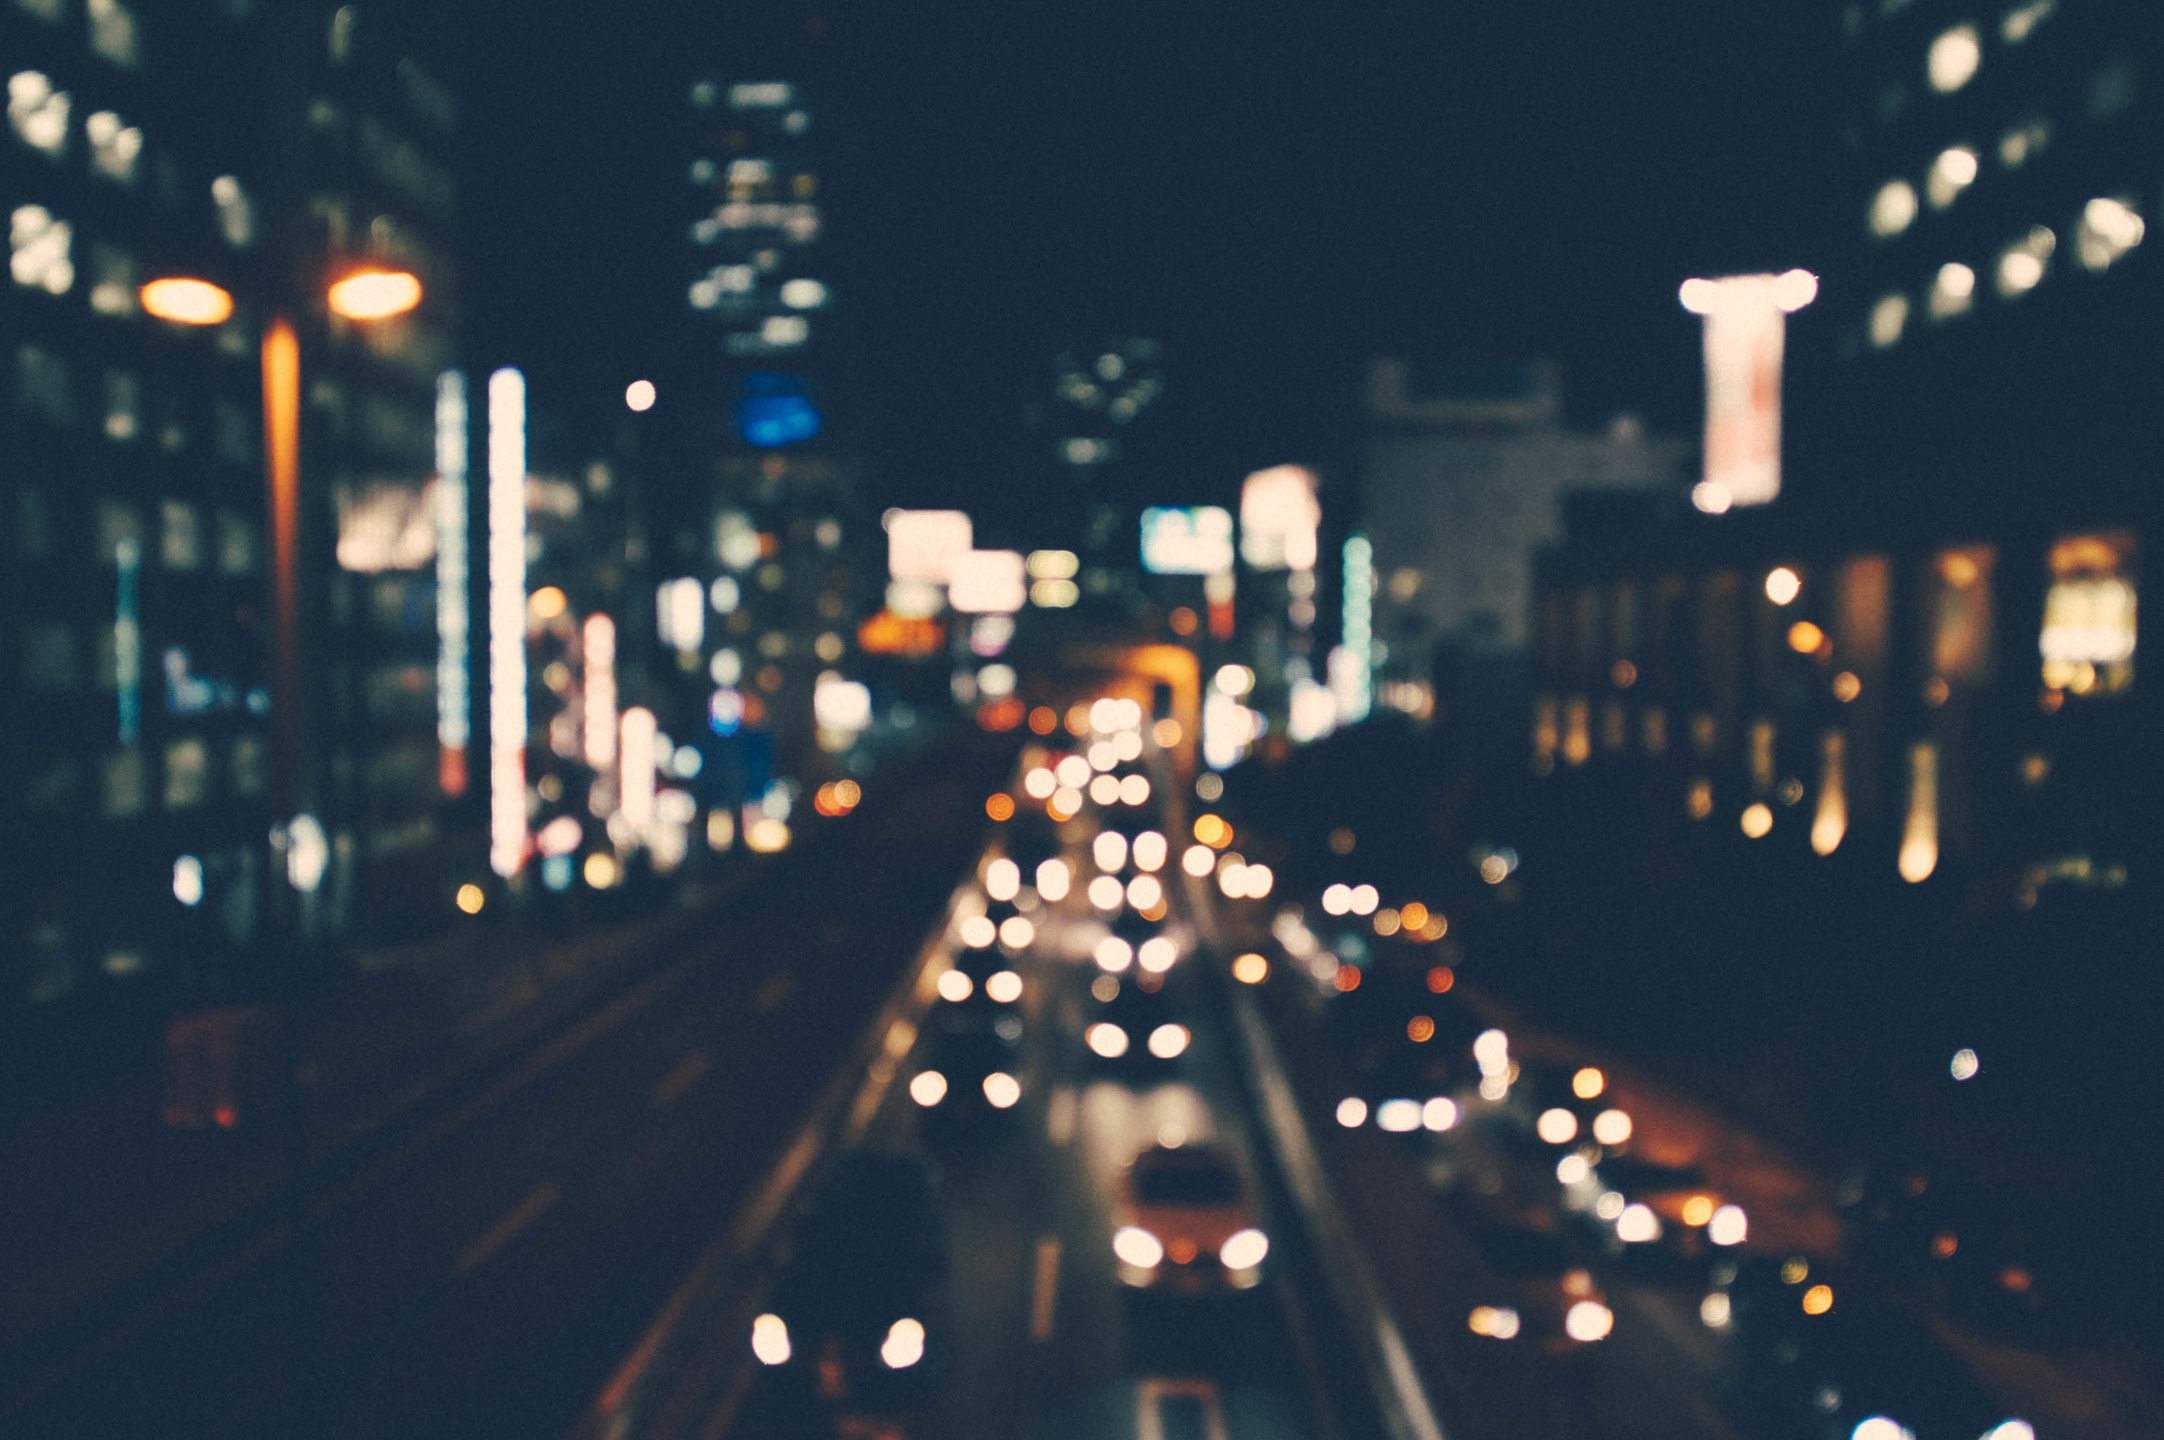 city-cars-traffic-lights